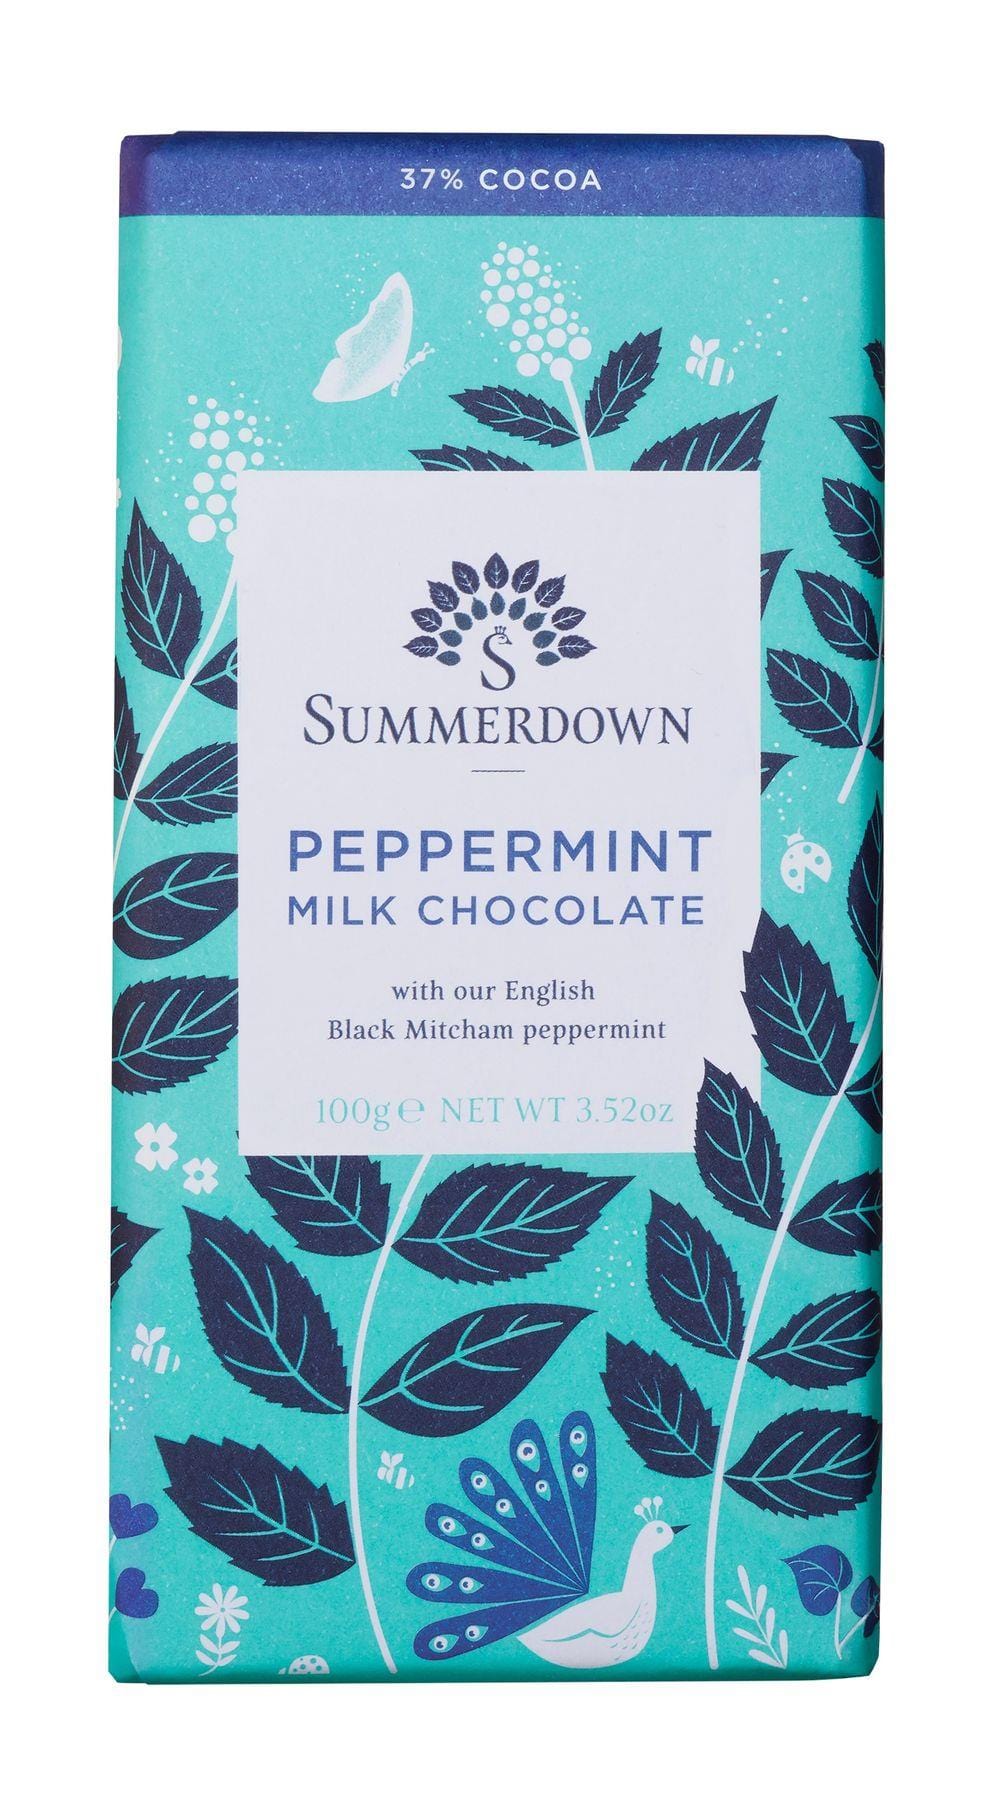 Chocolate Milk Peppermint Bar 100g
Summerdown